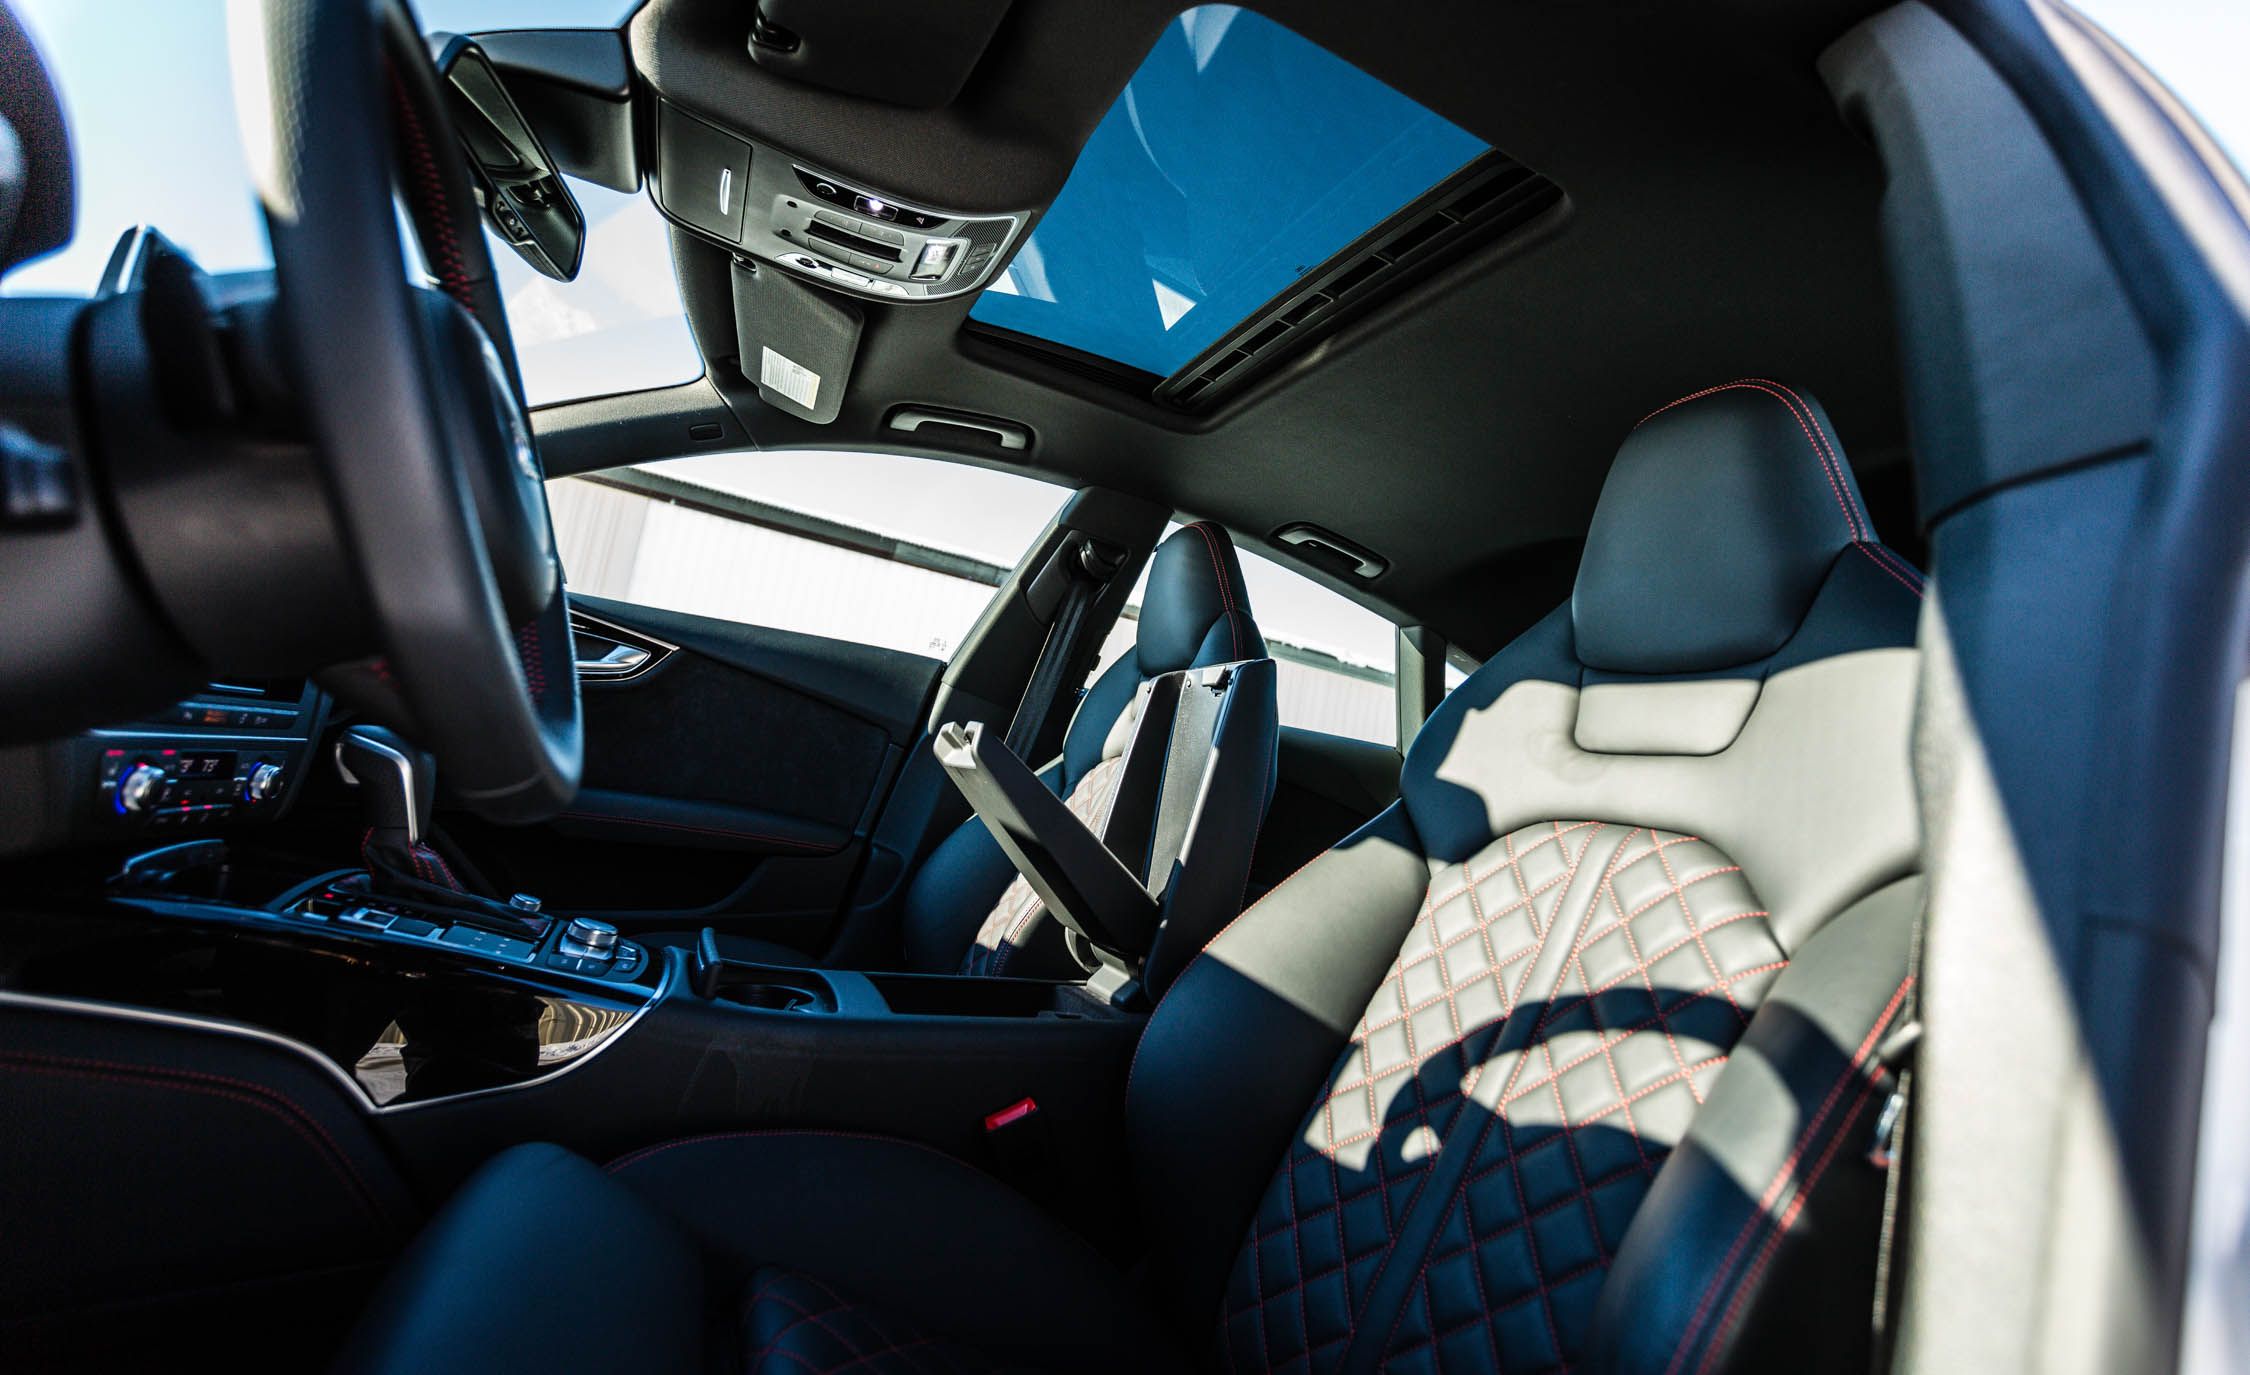 2017 Audi A7 Interior Seats Driver Cockpit (Photo 6 of 24)